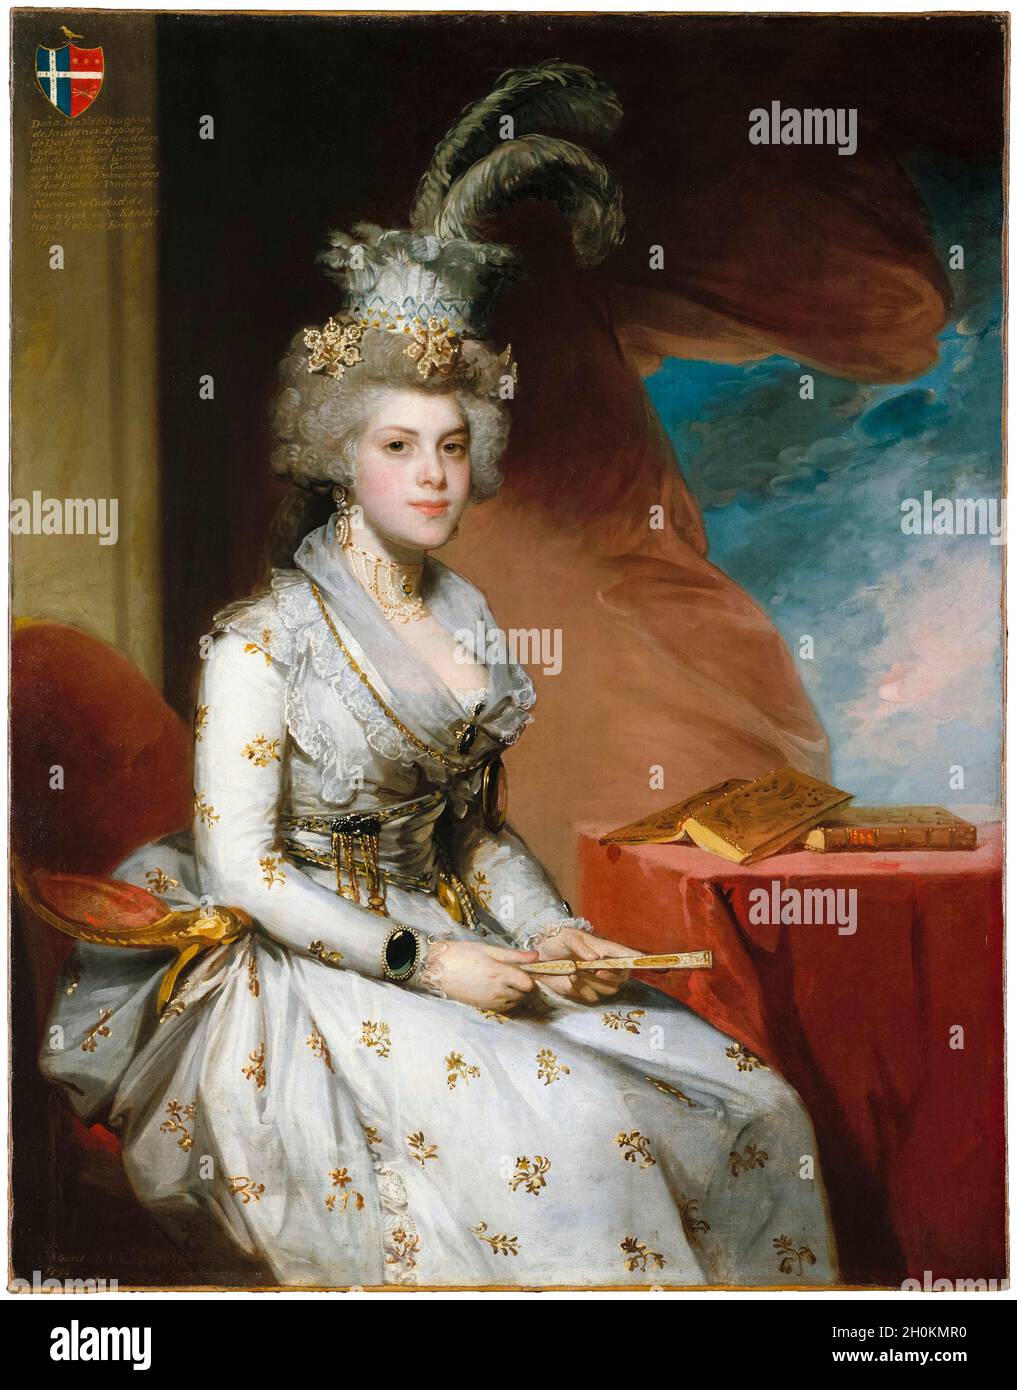 Matilda Stoughton de Jaudenes (1778-after 1822), portrait painting, 1794 Stock Photo